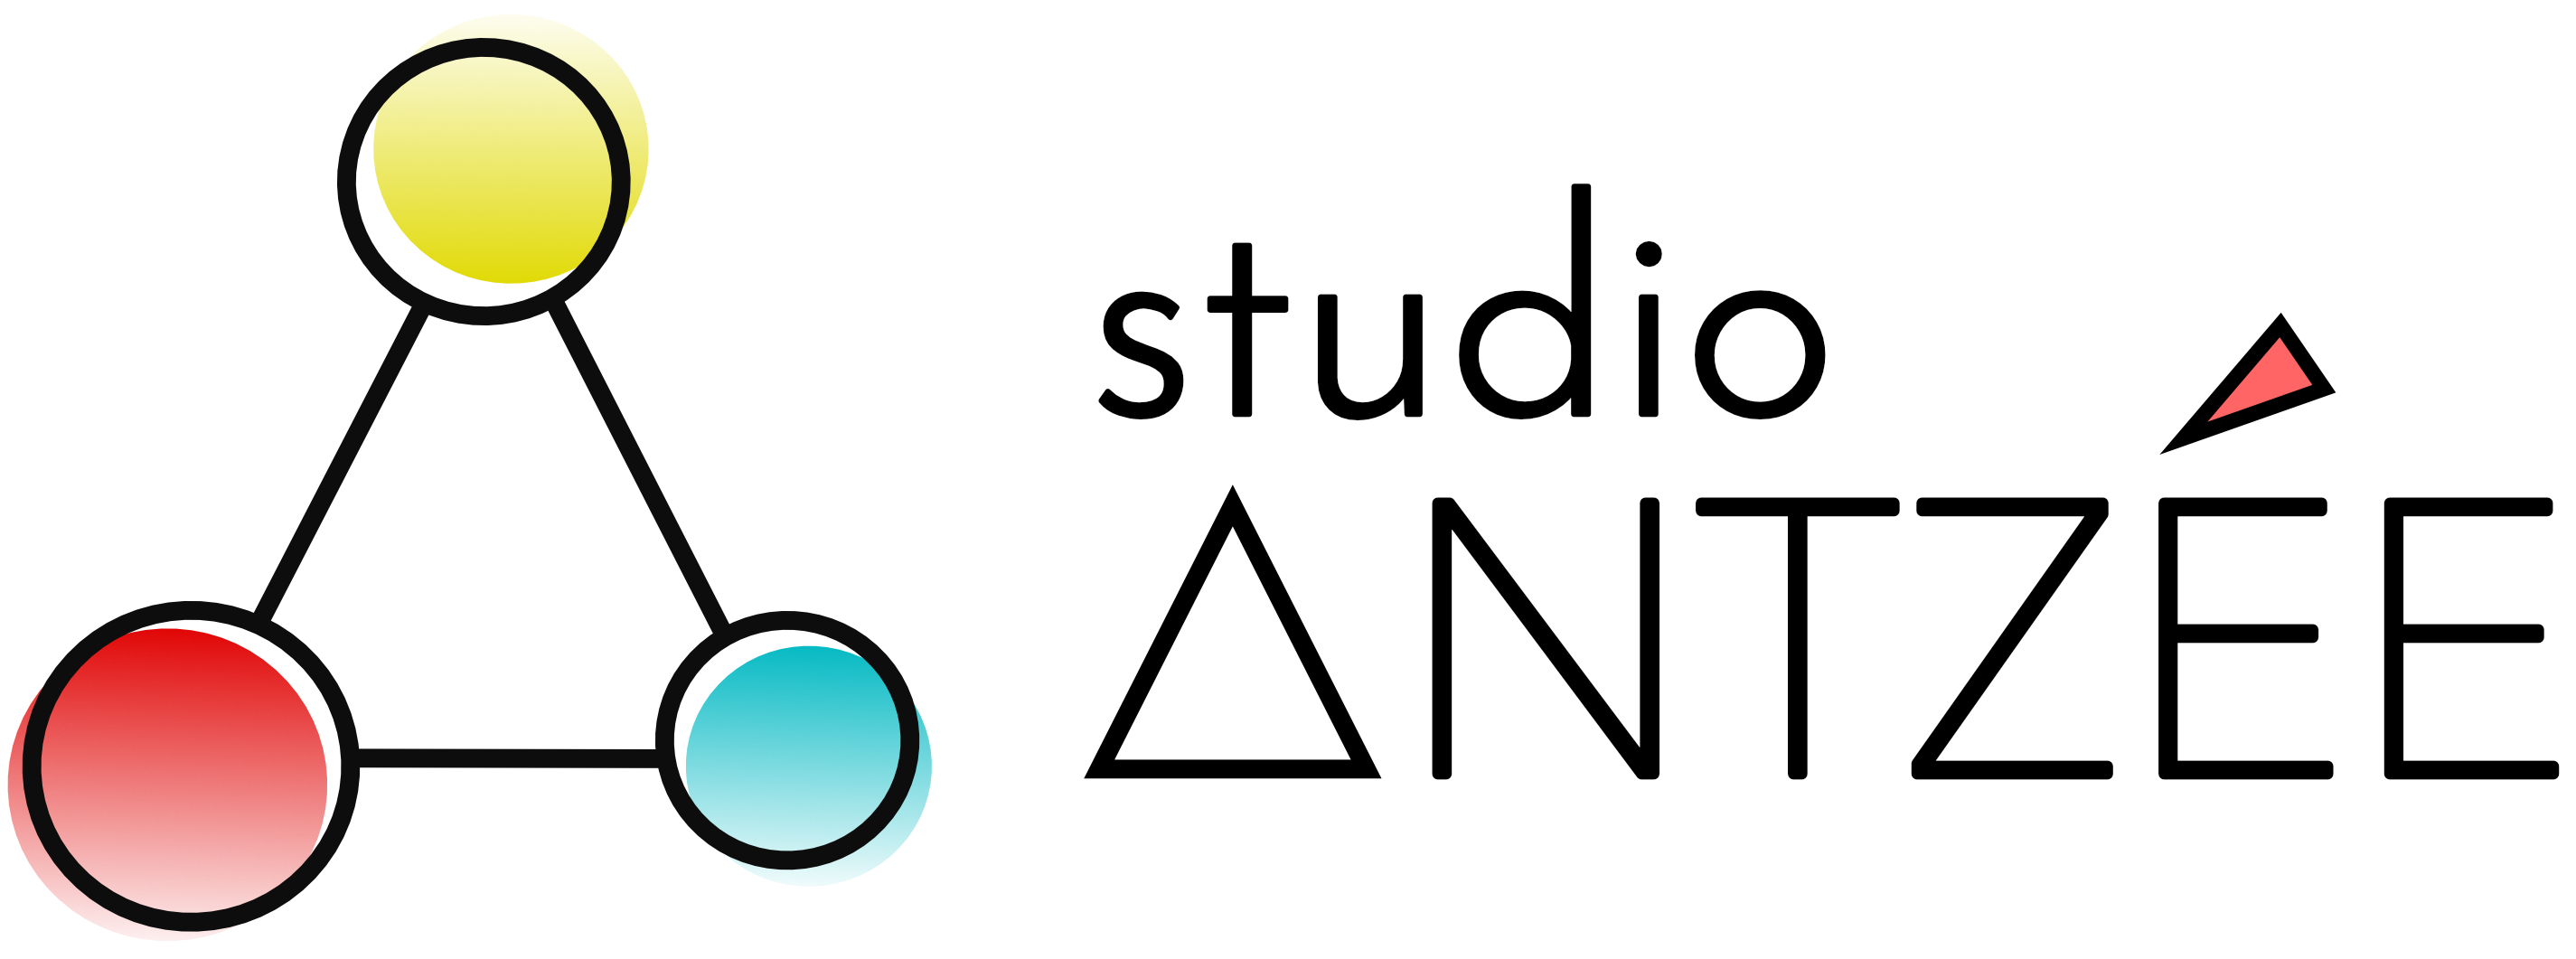 Studio Antzée logo